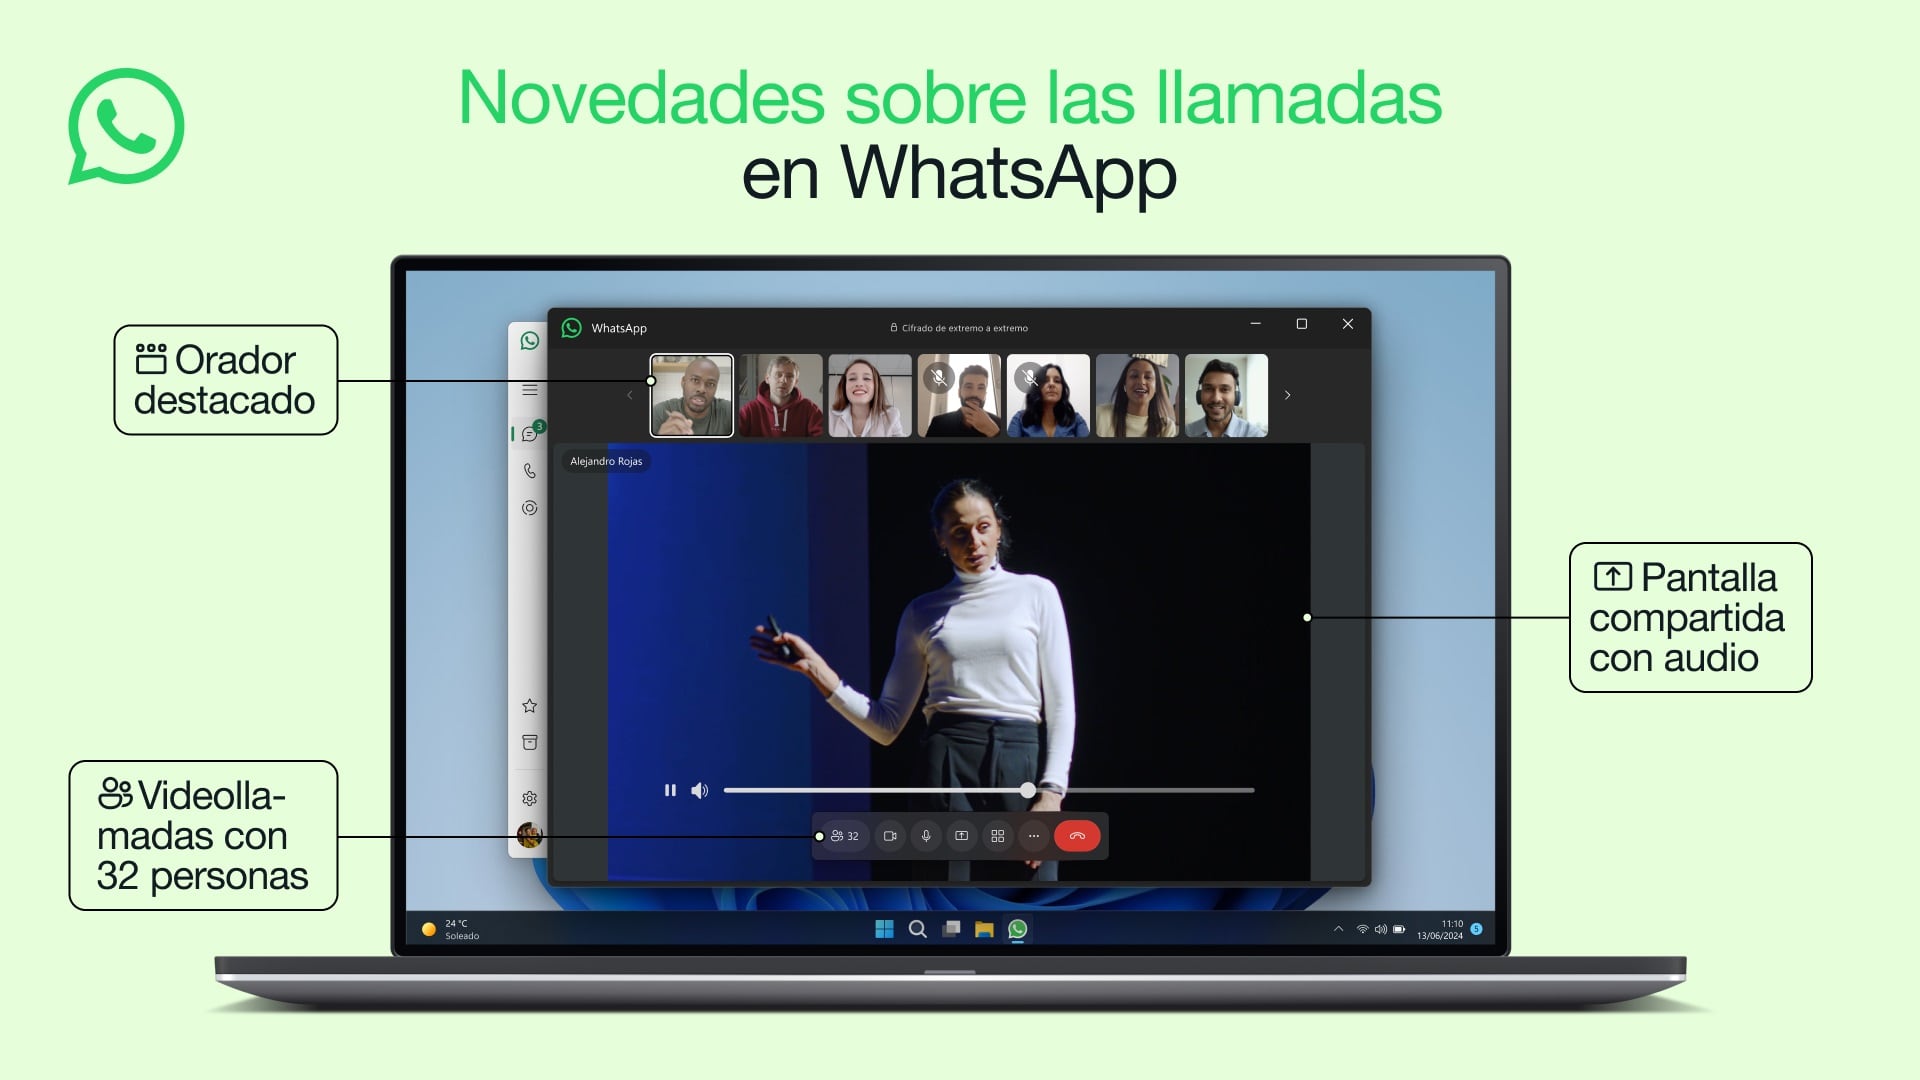 Las videollamadas de WhatsApp permiten hasta 32 participantes. (WhatsApp)